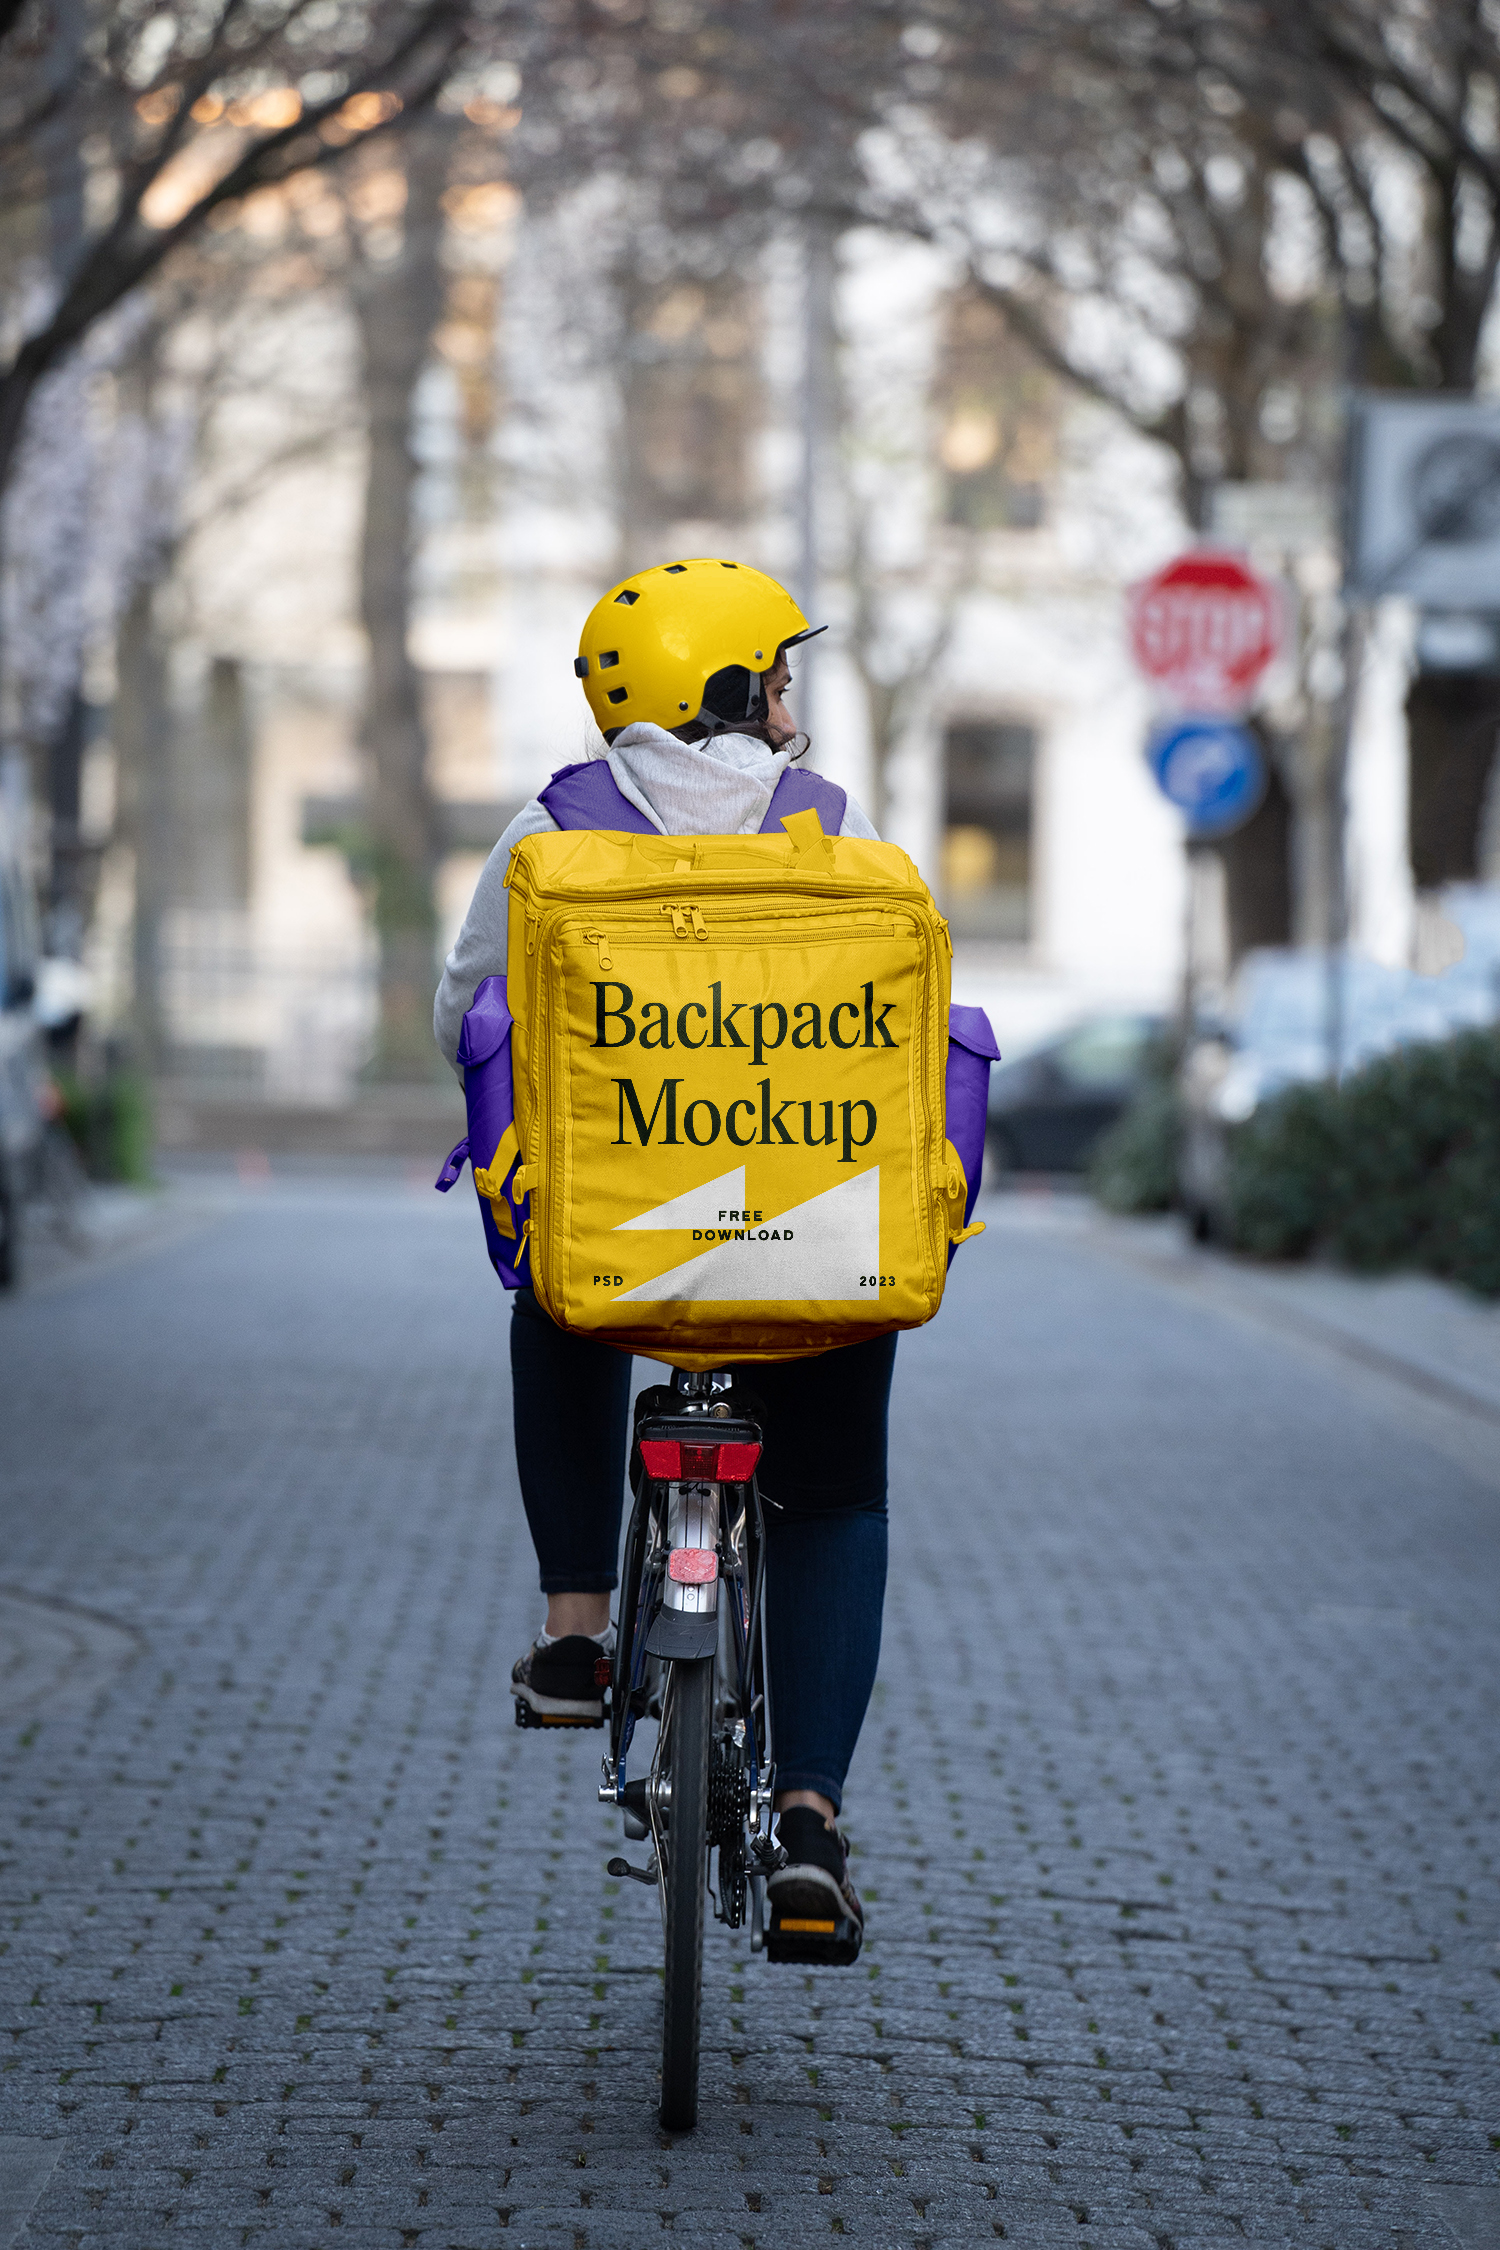 Delivery Backpack Free Mockup